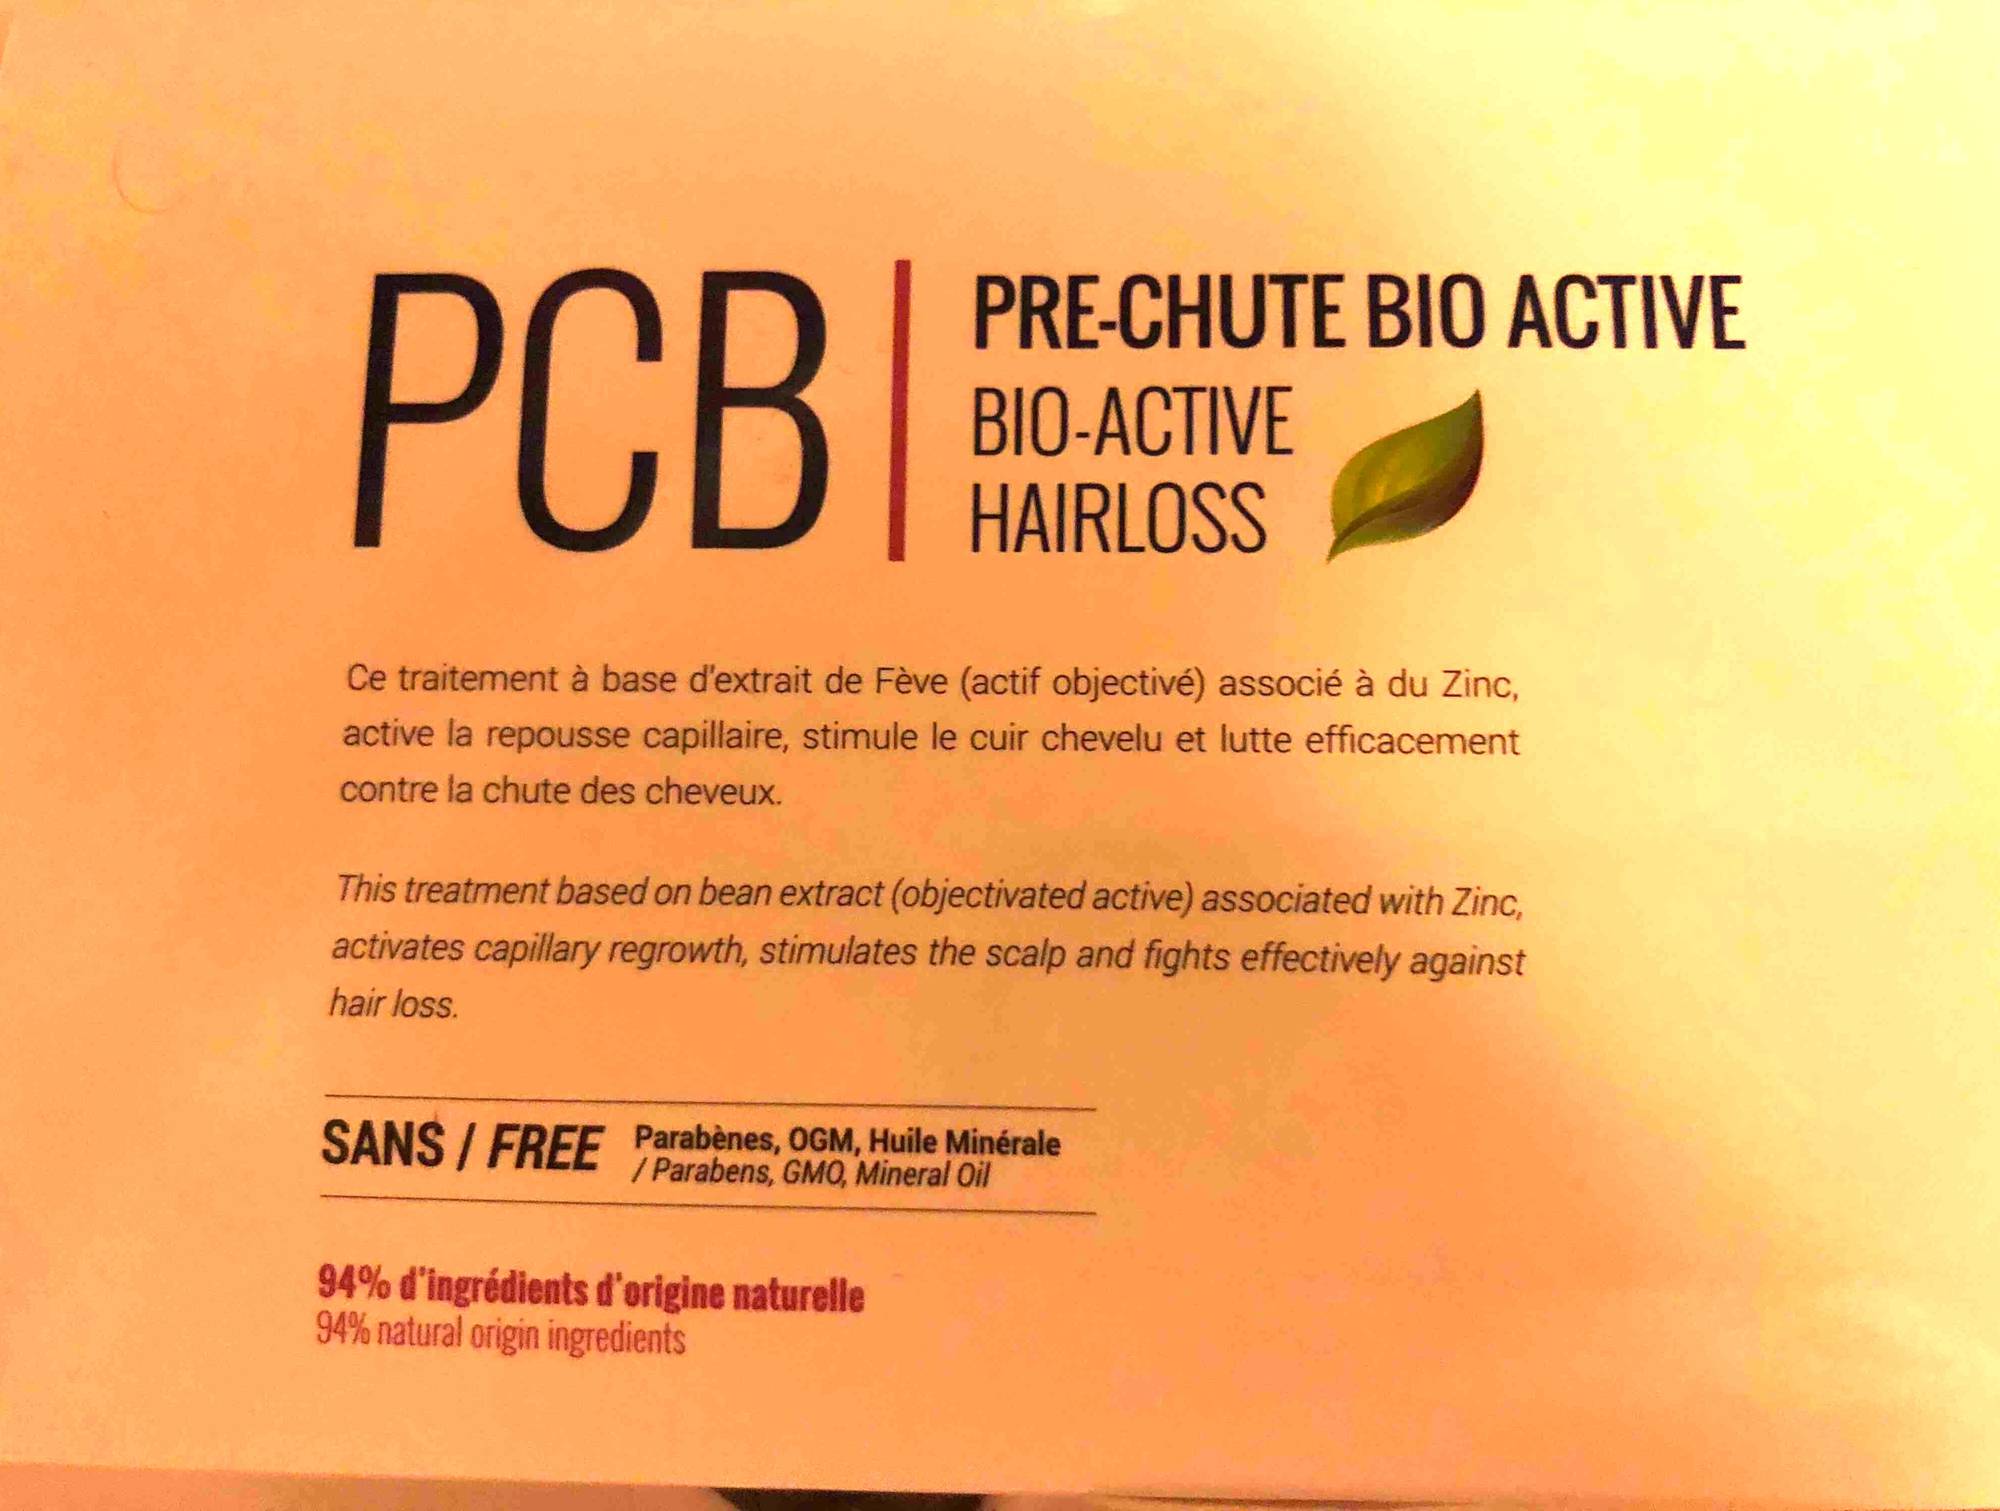 CLINERIENCE - PCB - Pre-chute bio active hairloos